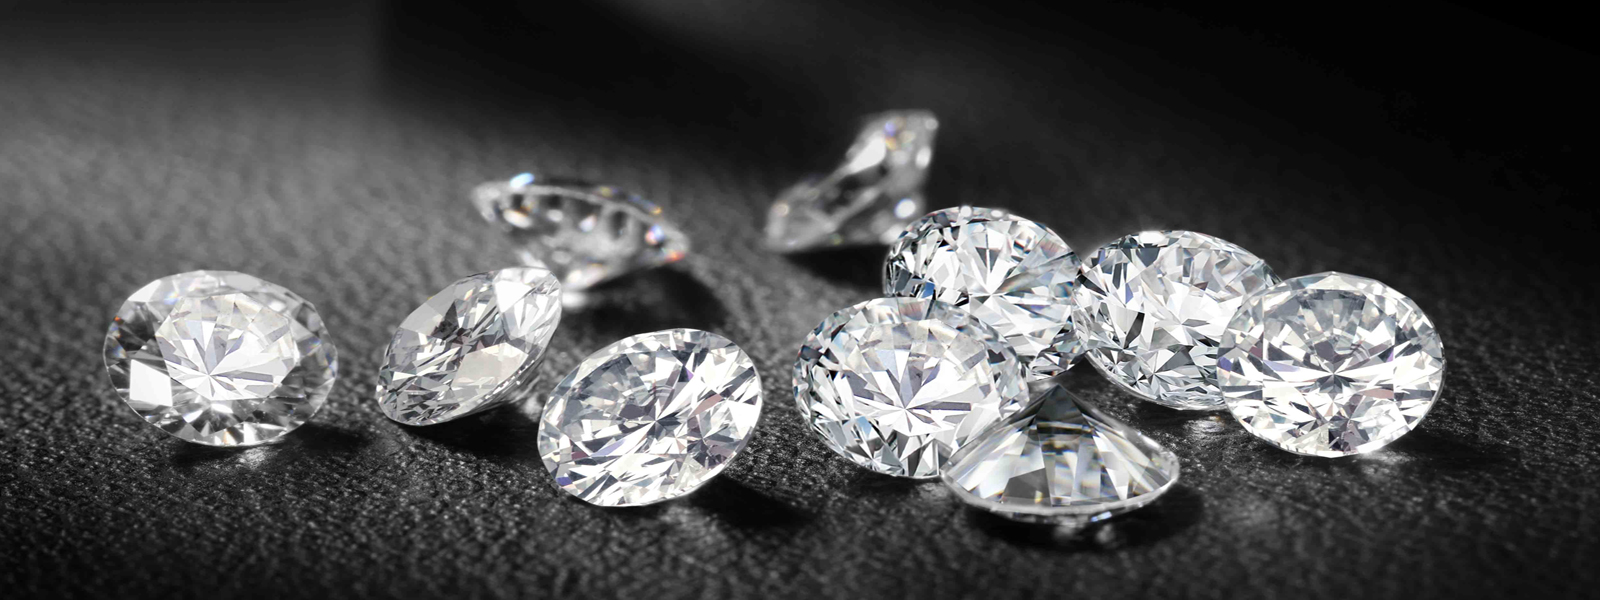 GGL LAB : Jewelery Diamond Certificates